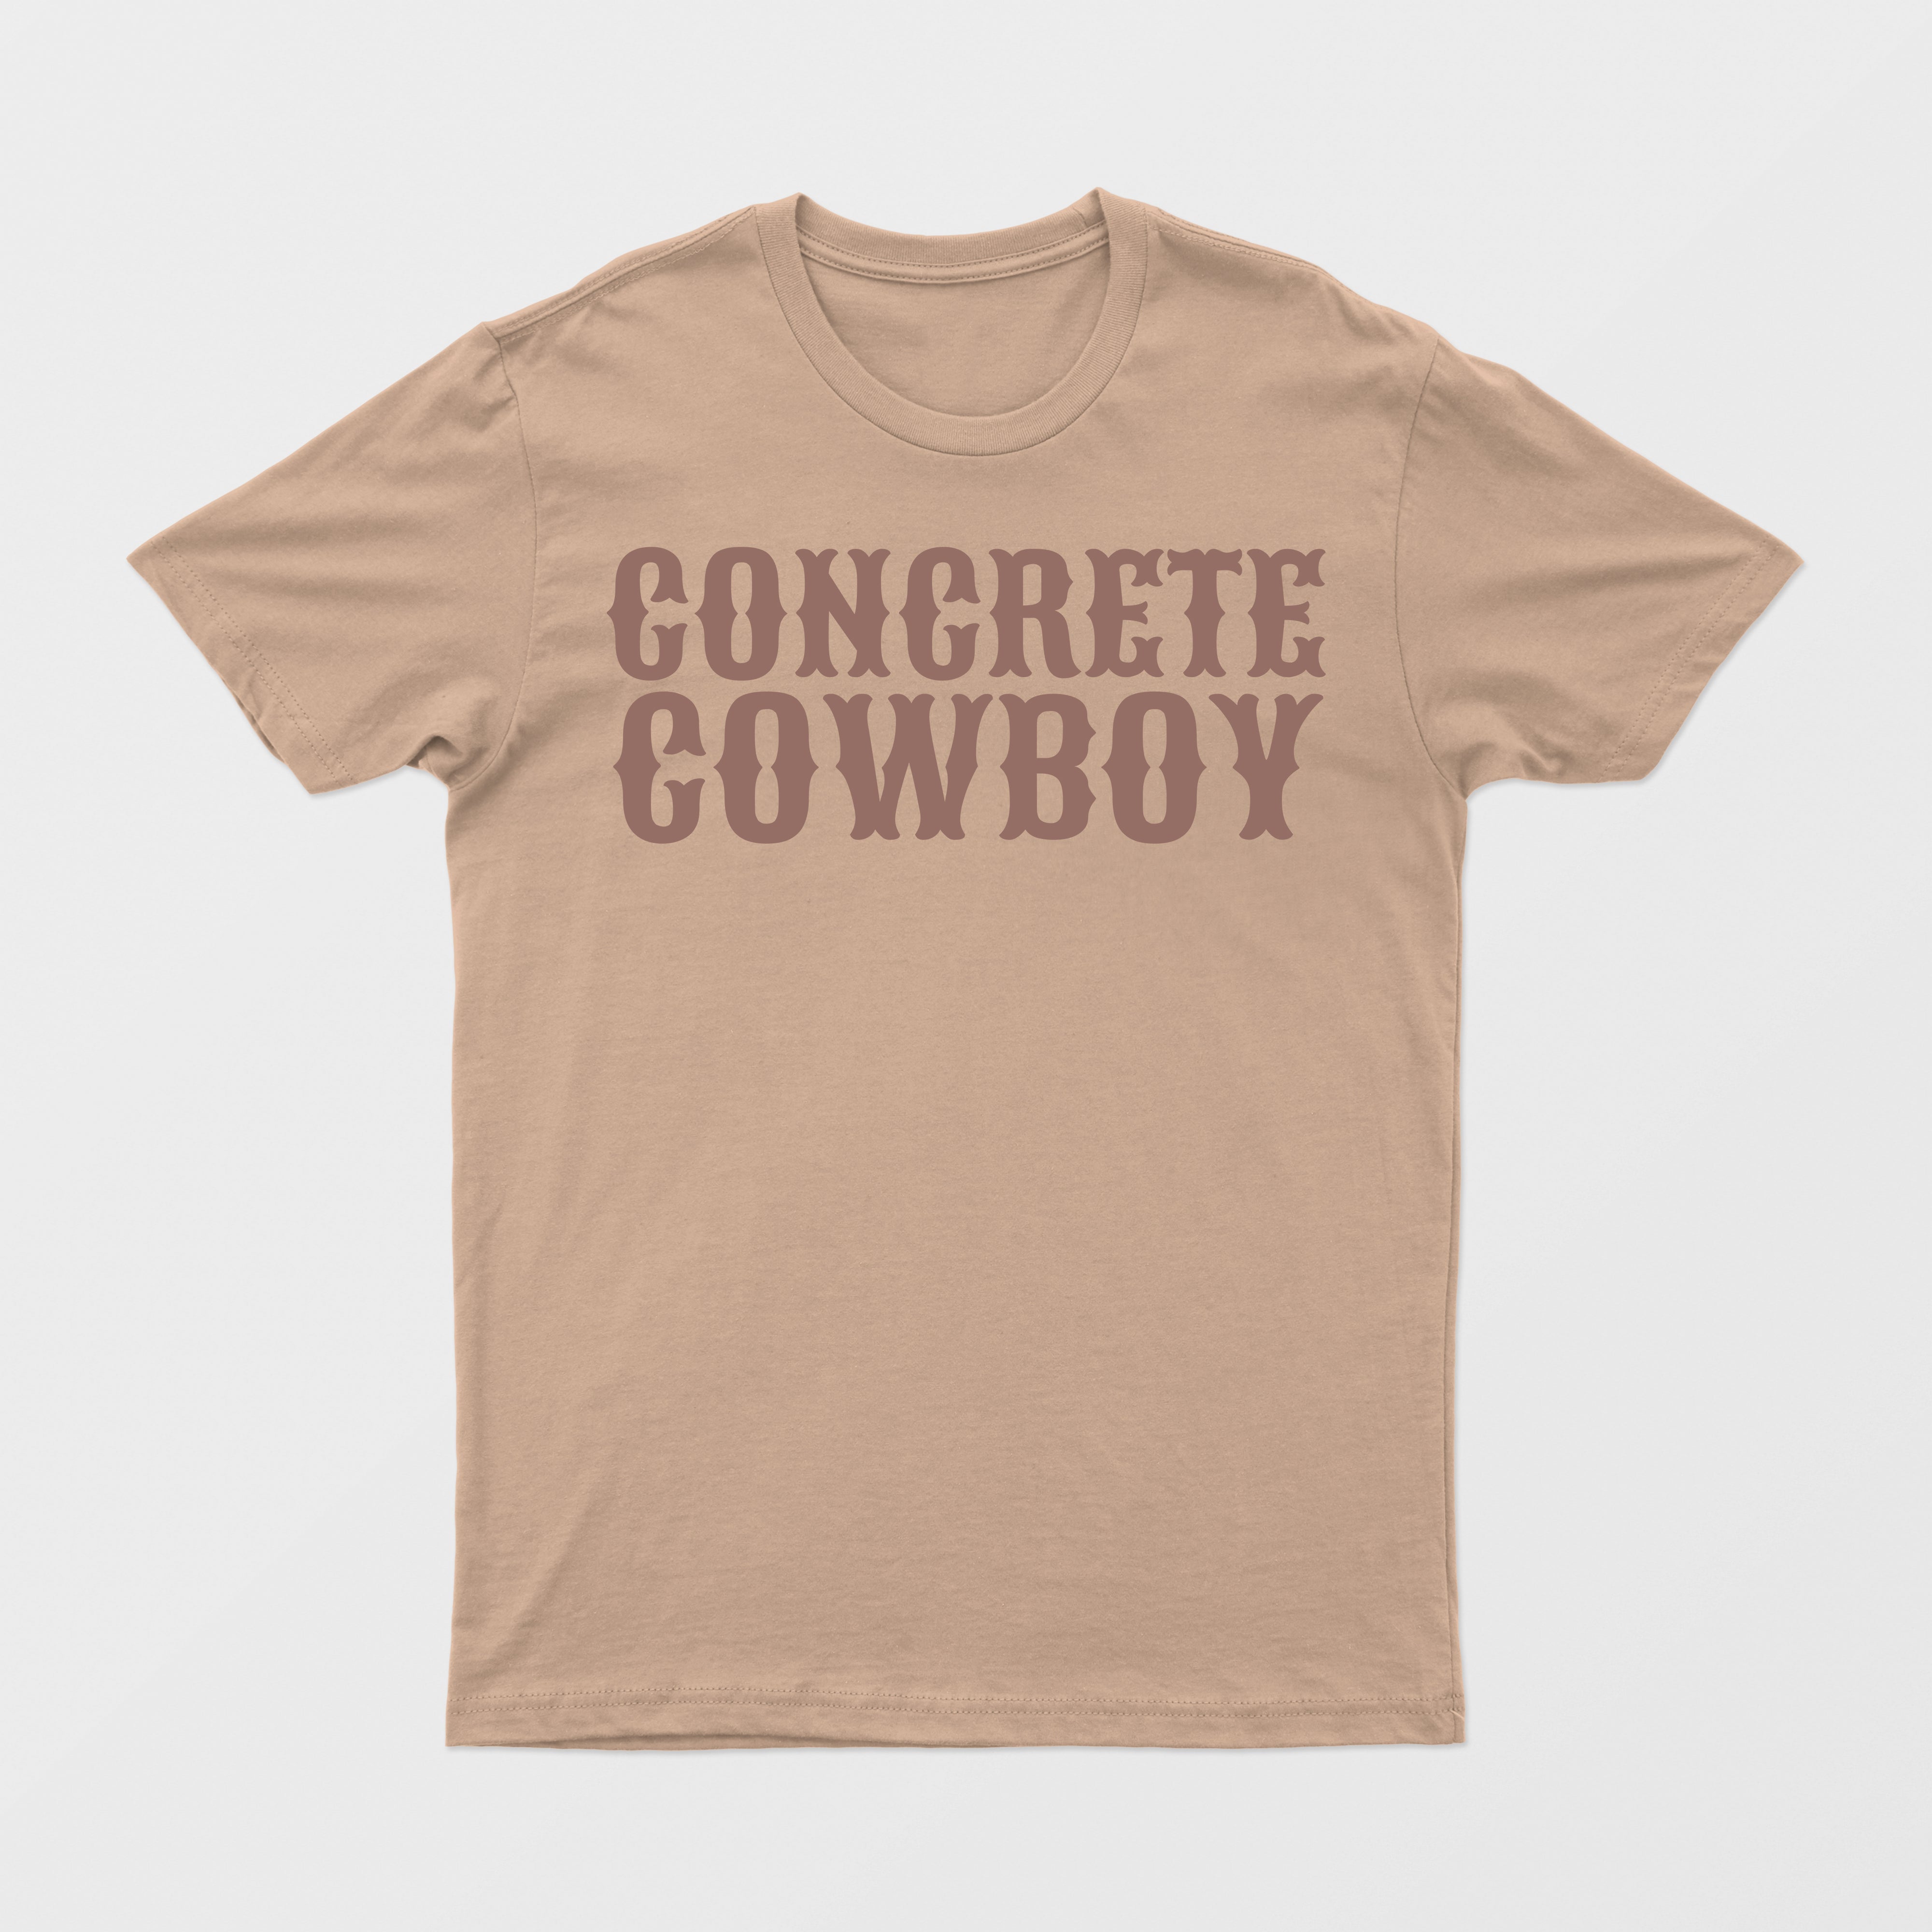 Concrete Cowboy Tee